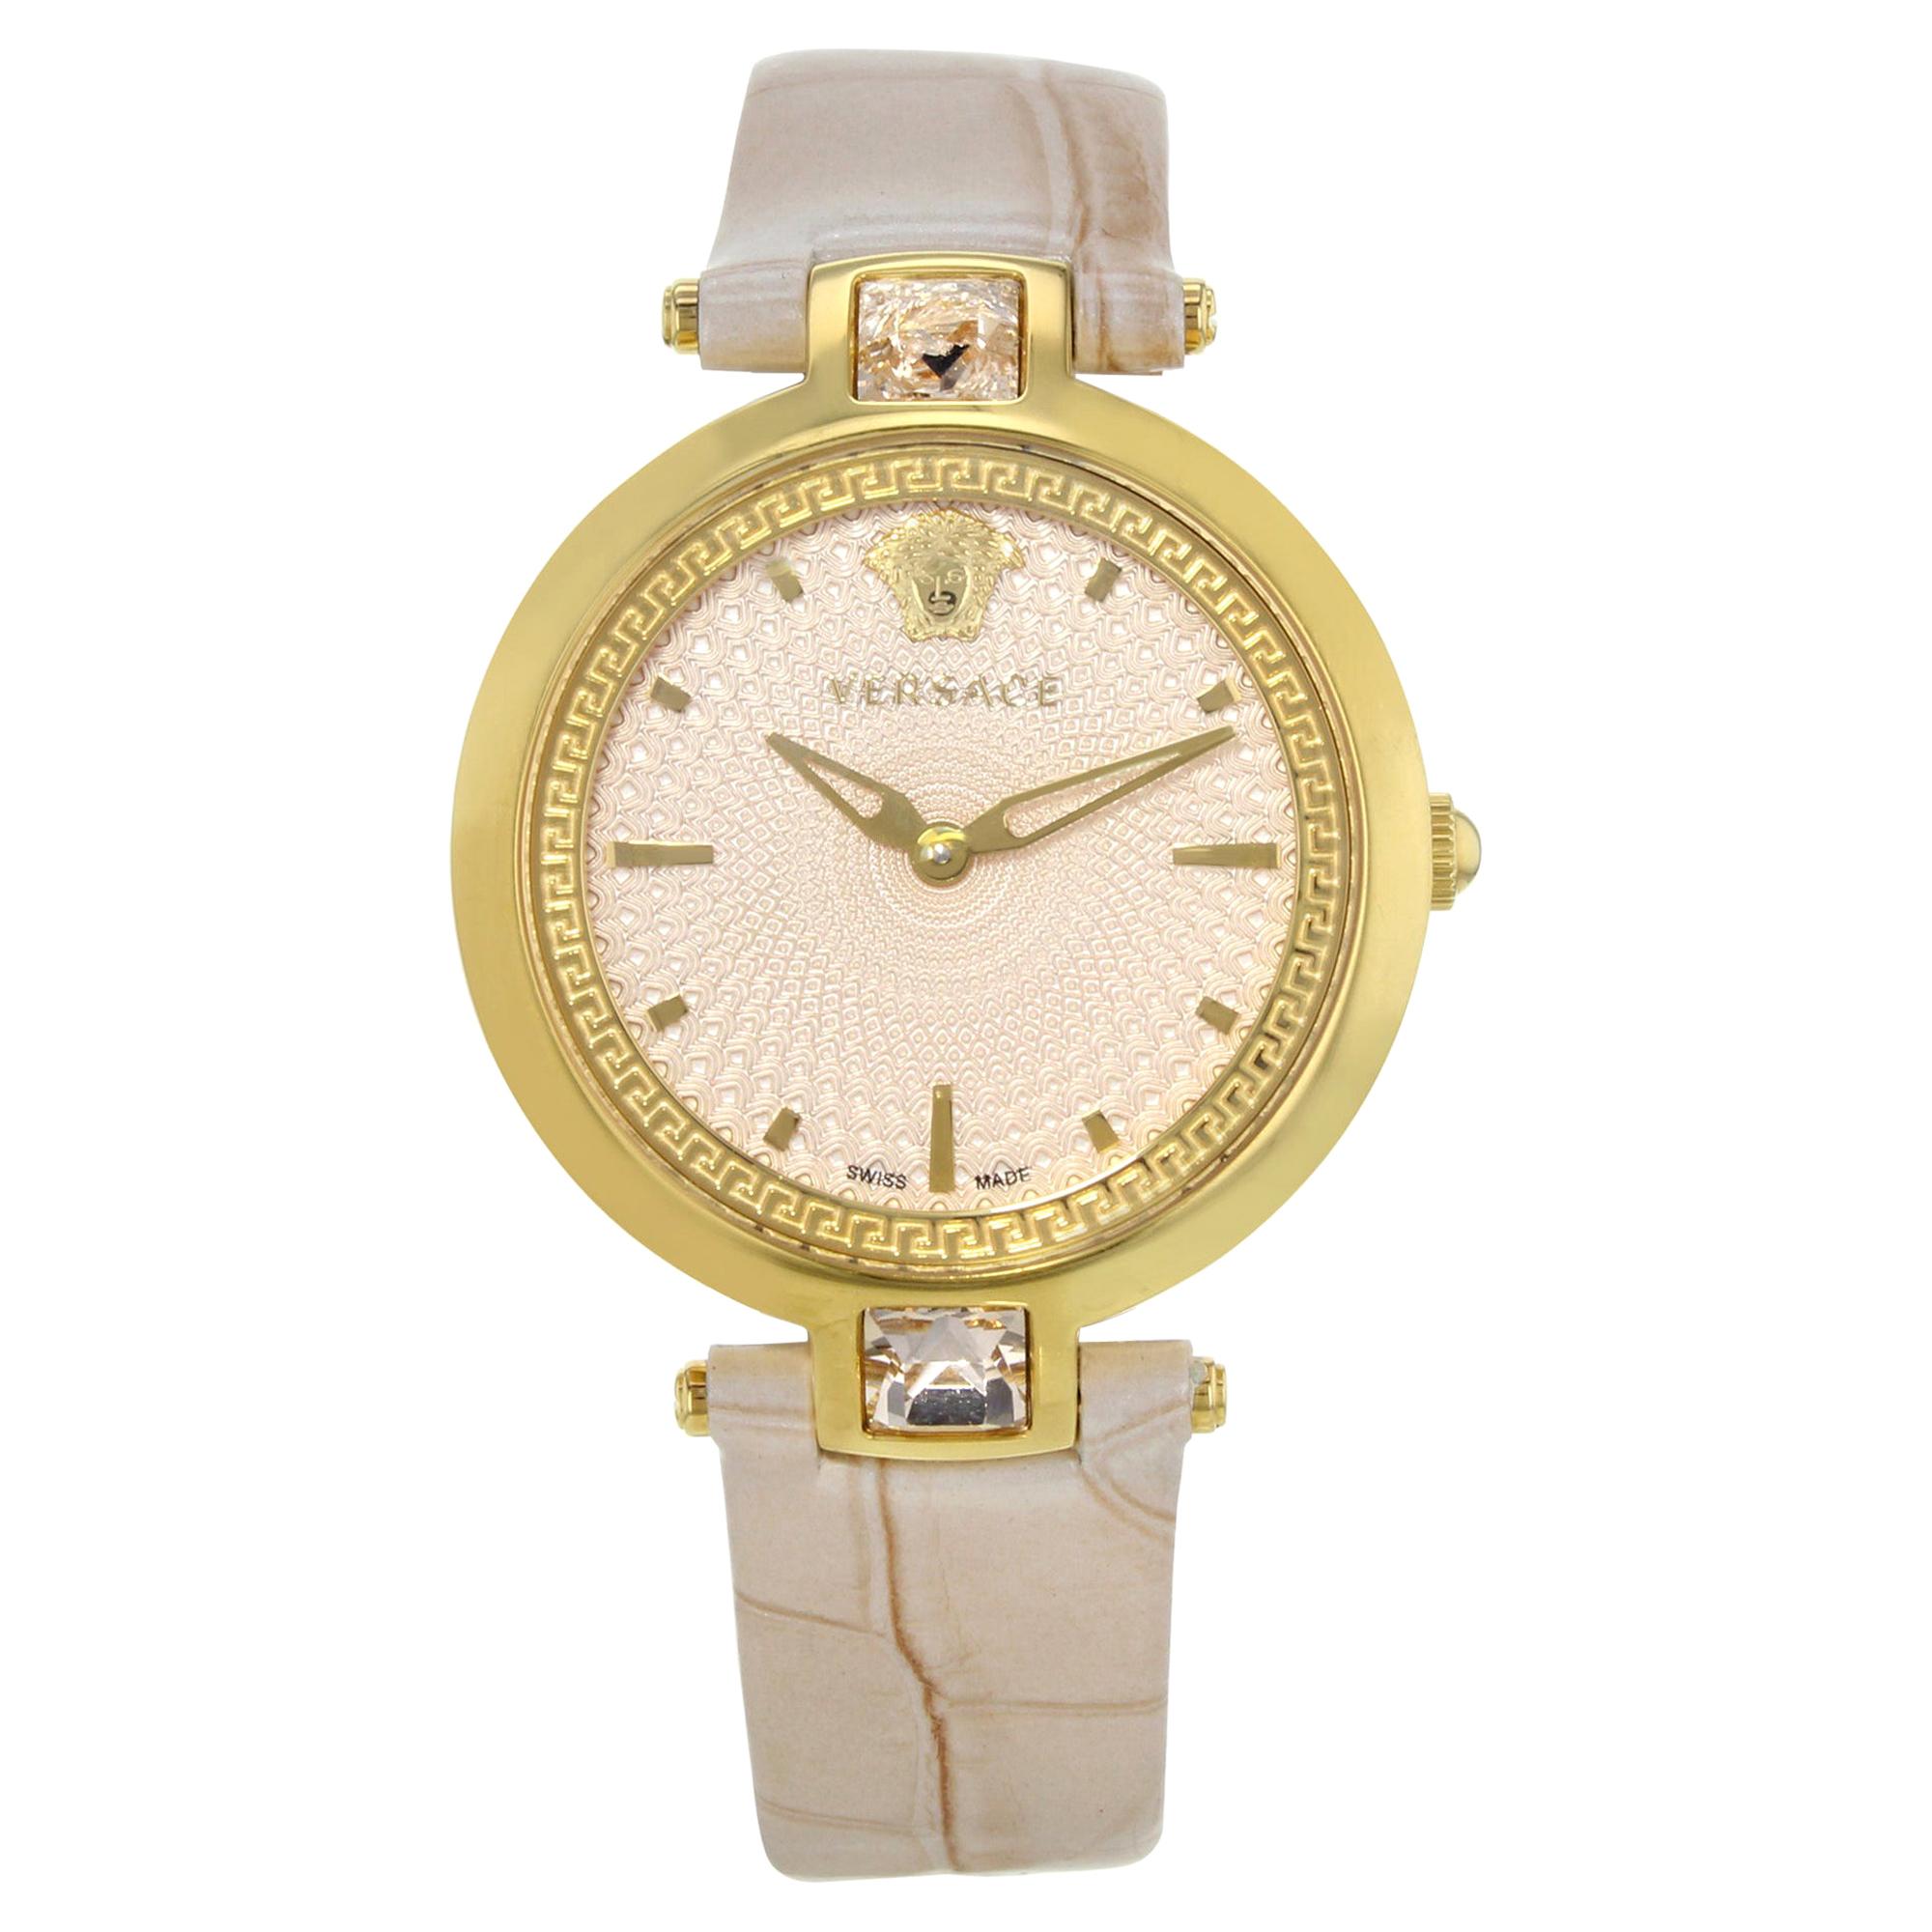 Versace Olympo Crystal Gleam Pink Dial Gold Tone Steel Quartz Watch VAN050016